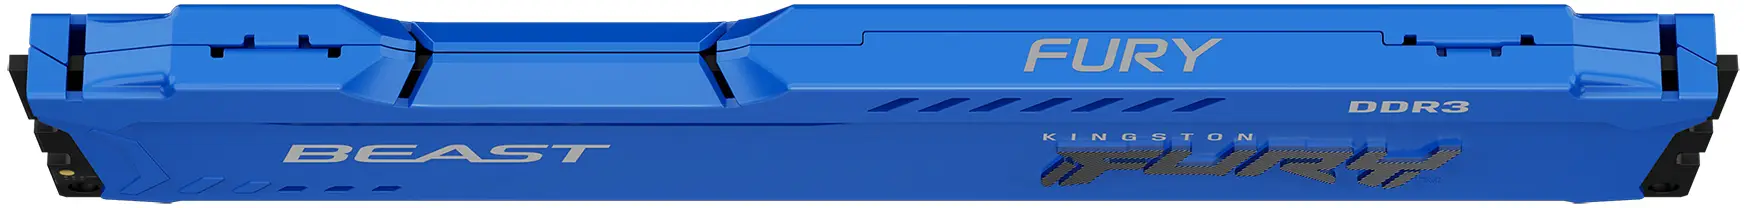 Оперативная память KINGSTON FURY Beast Blue DIMM DDR3 8GB 1600MHz (KF316C10B/8)